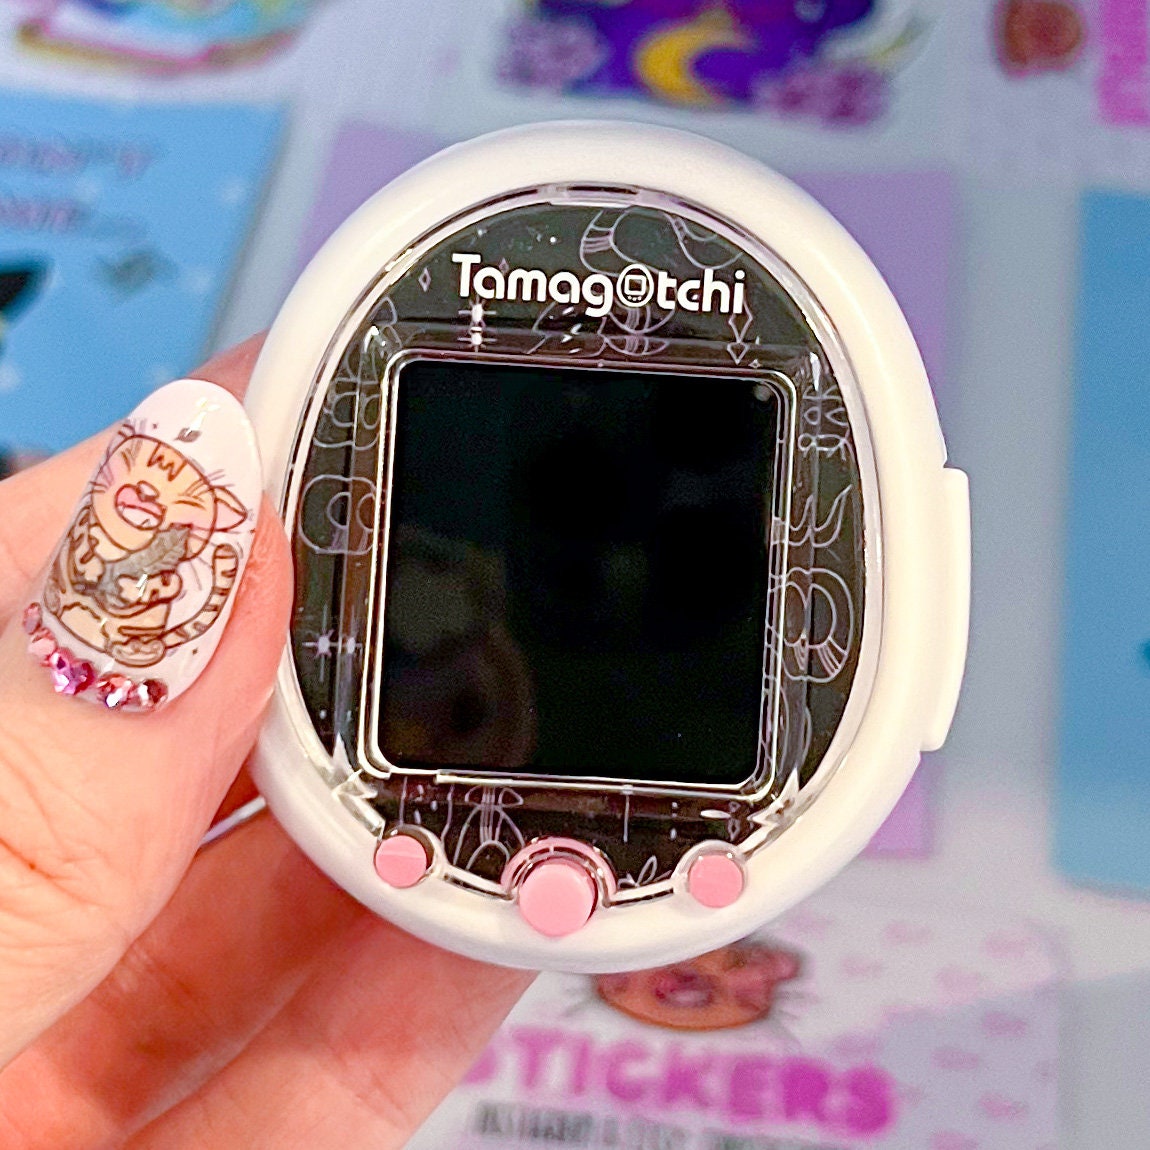 Tamagotchi Smart Watch Faceplates - Black Snakes